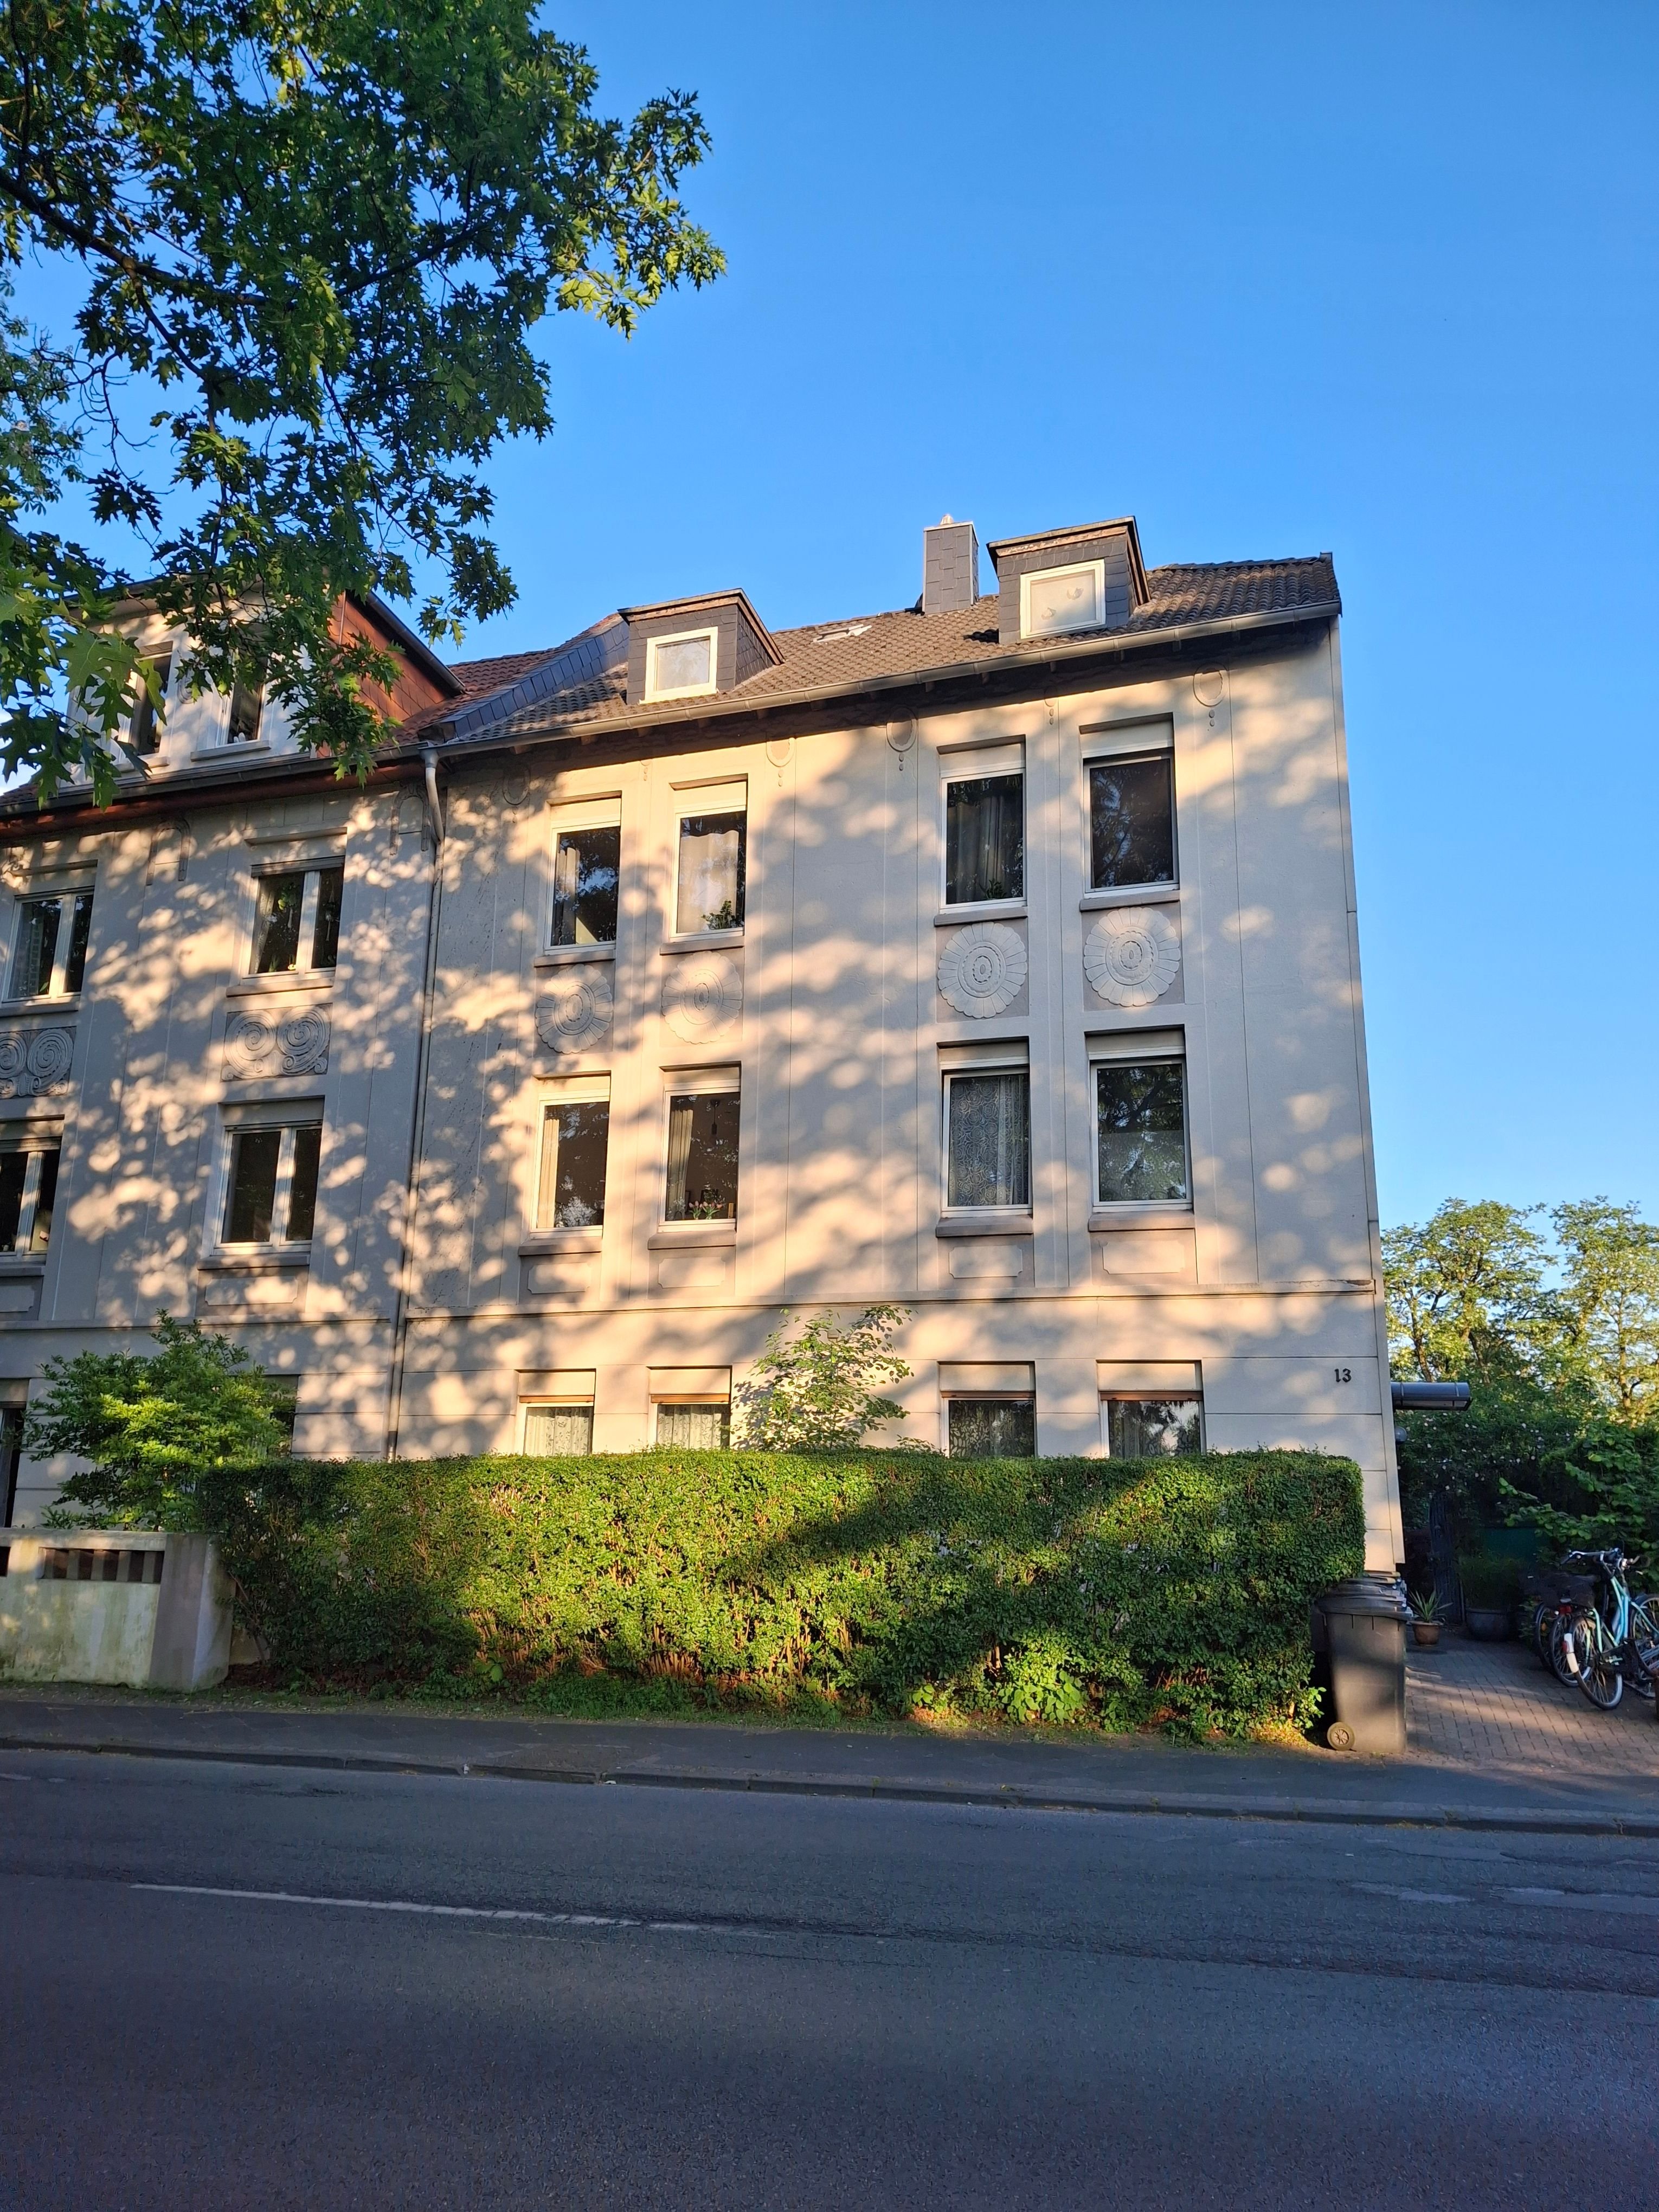 Wohnung zur Miete 780 € 3 Zimmer 74 m² 2. Geschoss Blumenfeldstr. 13 Weitmar - Mitte Bochum 44795